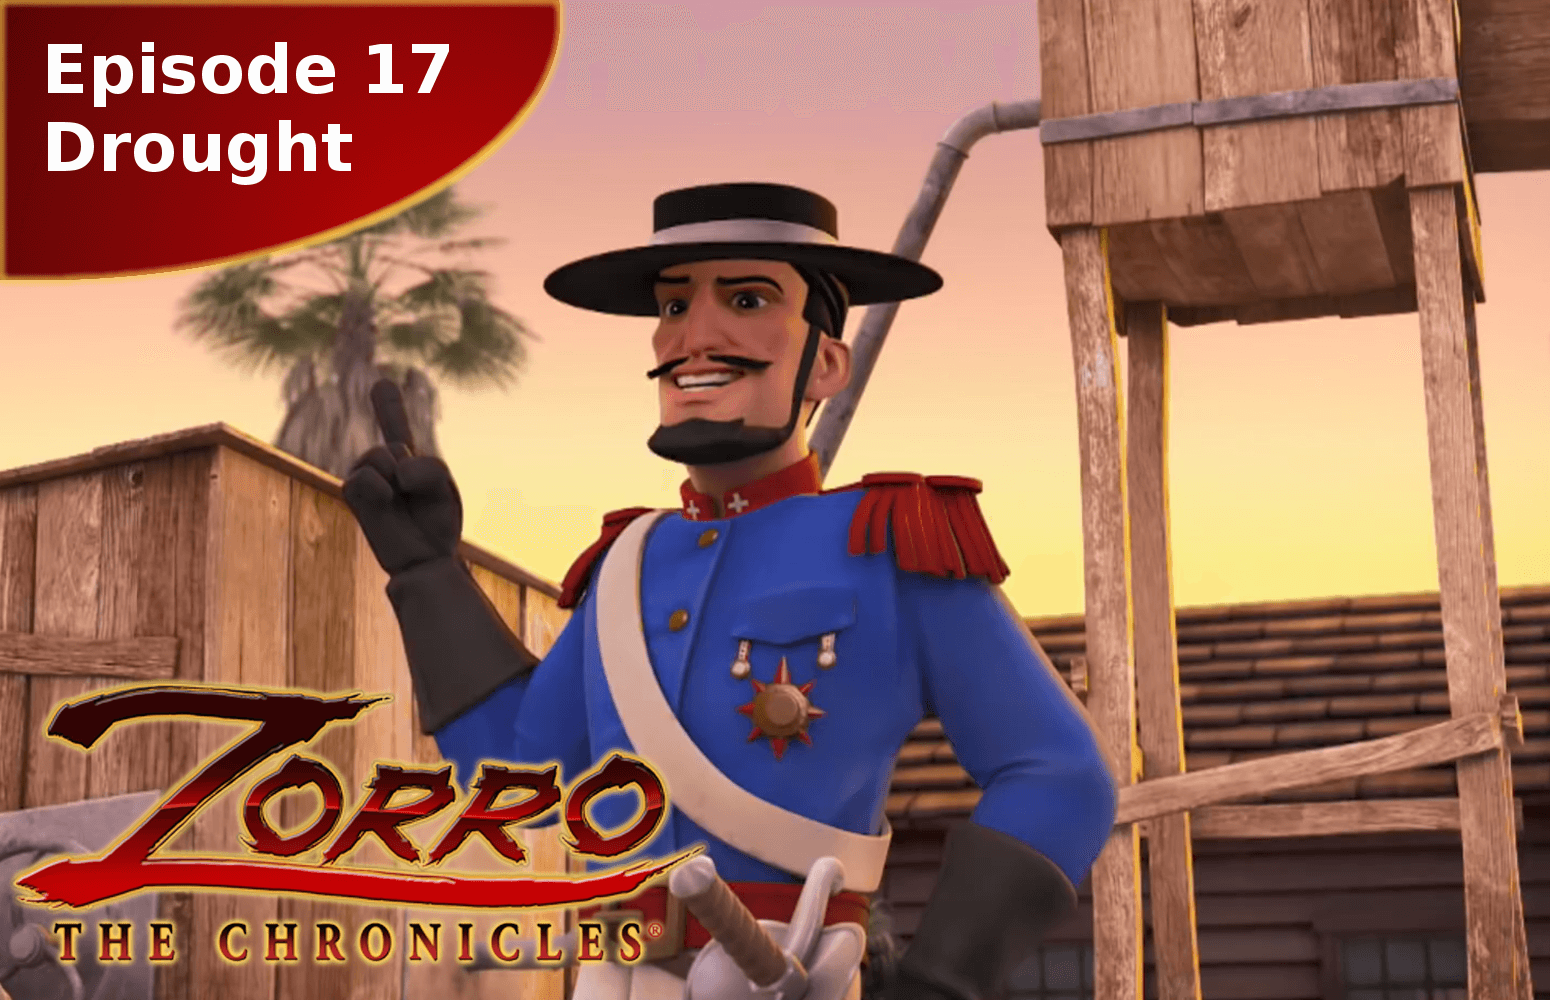 Zorro the Chronicles episode 17 Drought